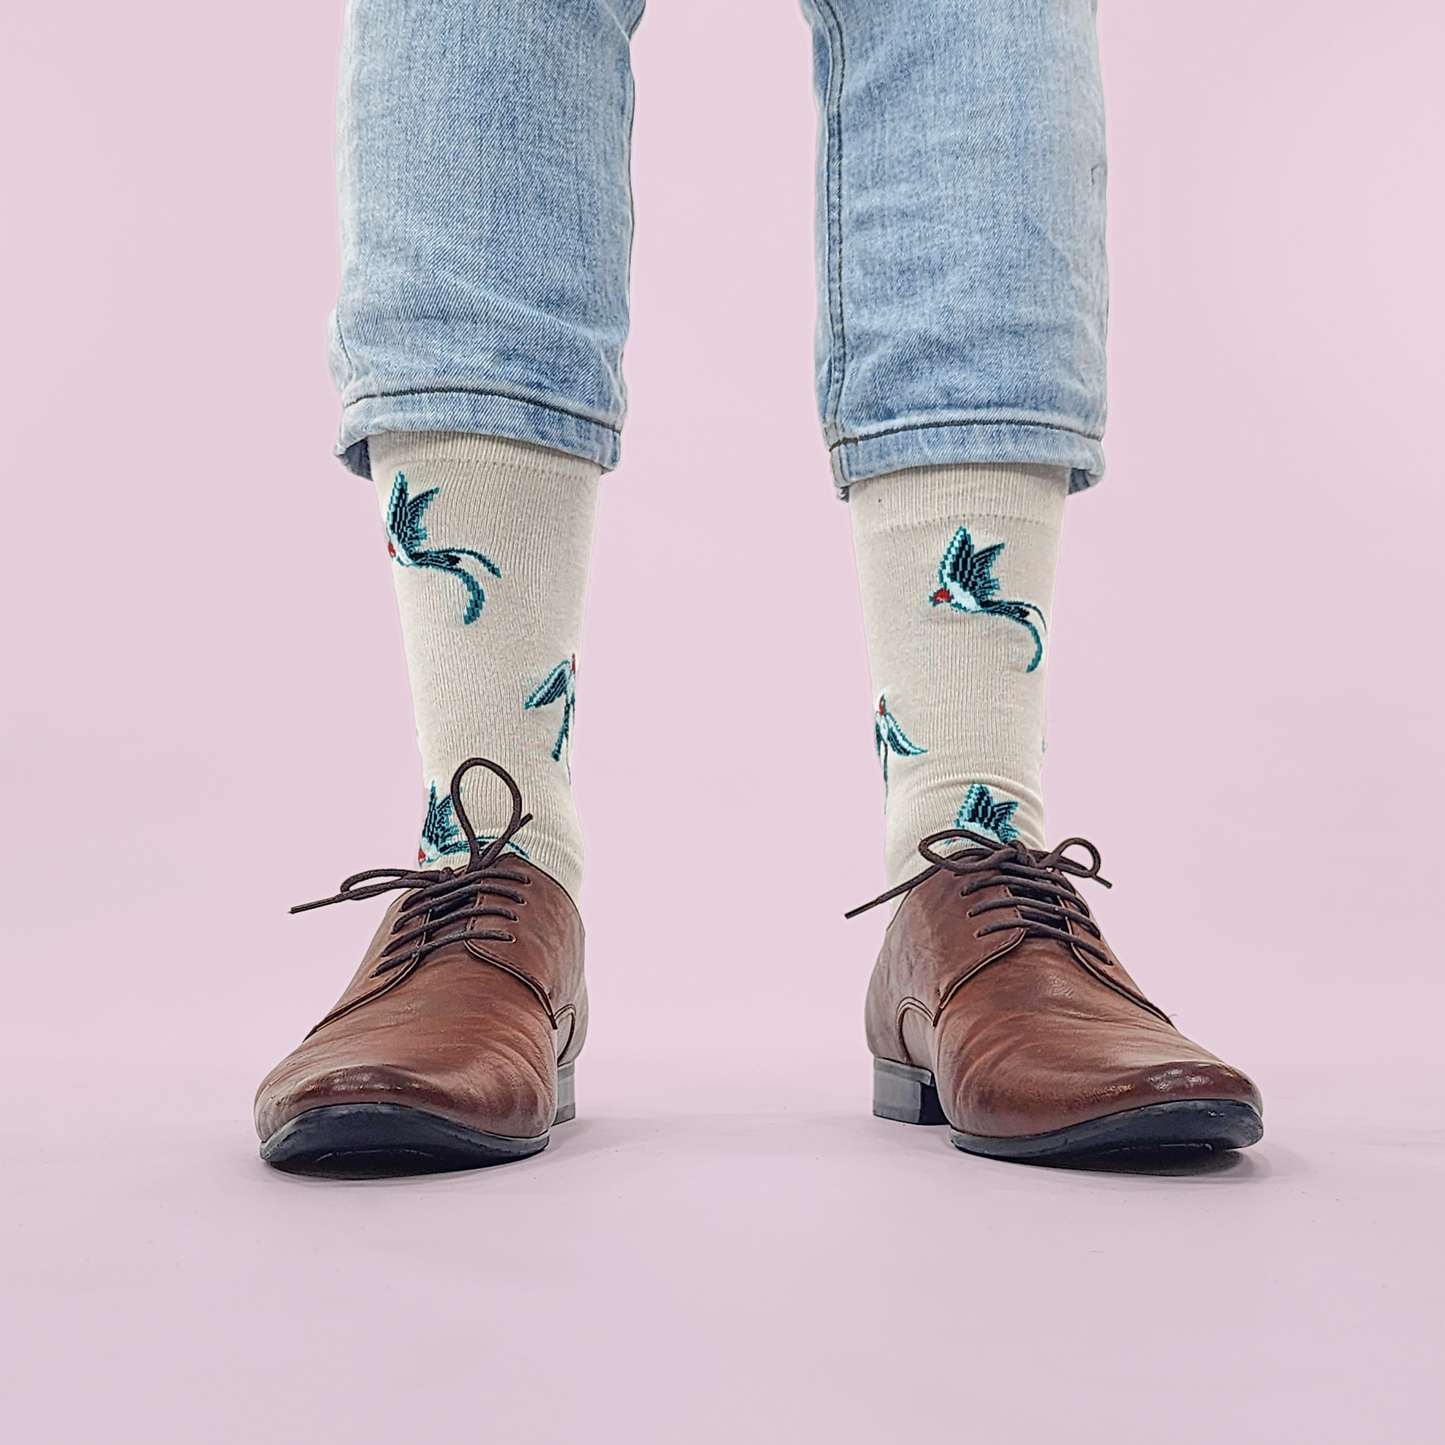 Ovarian Cancer Socks - Boxed Set